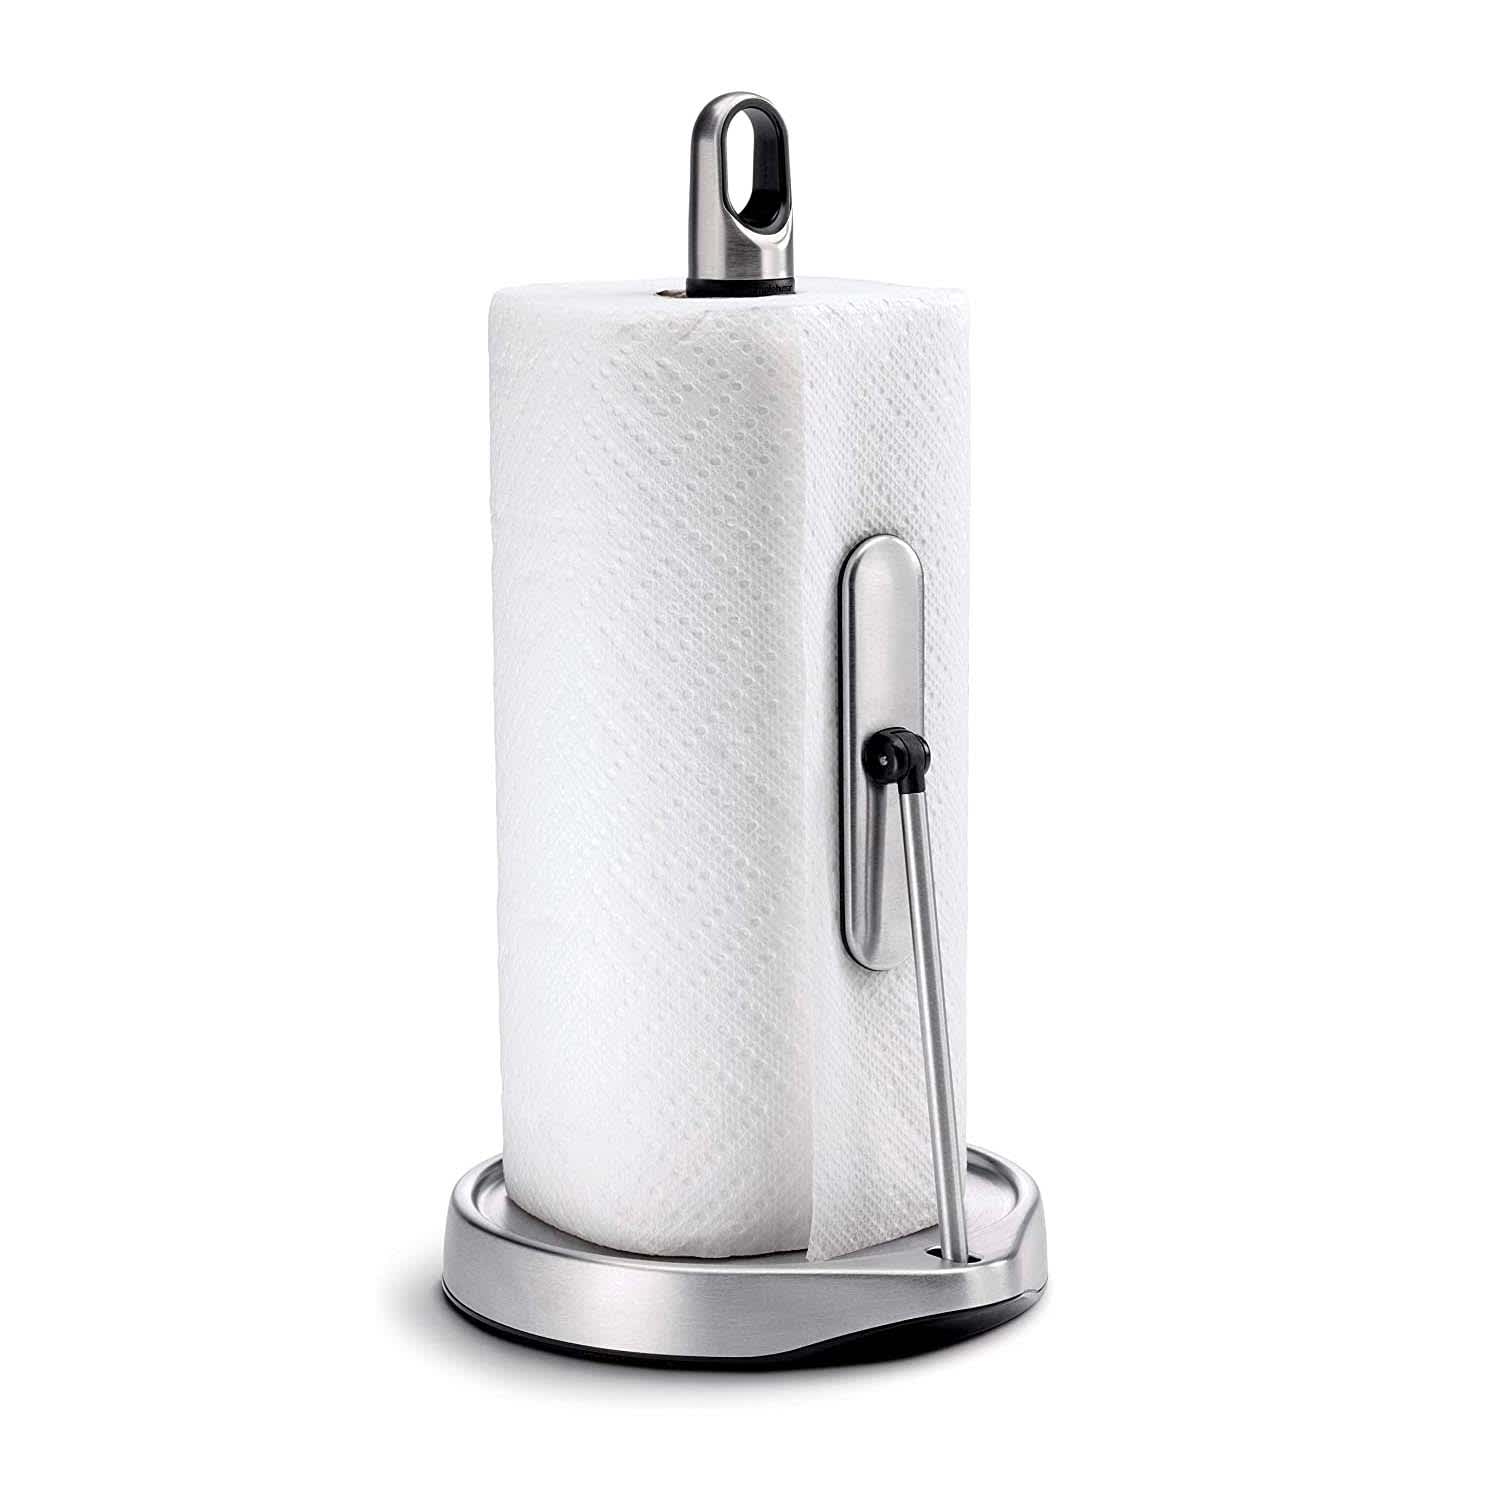 Simplehuman Tension Arm Paper Towel Holder